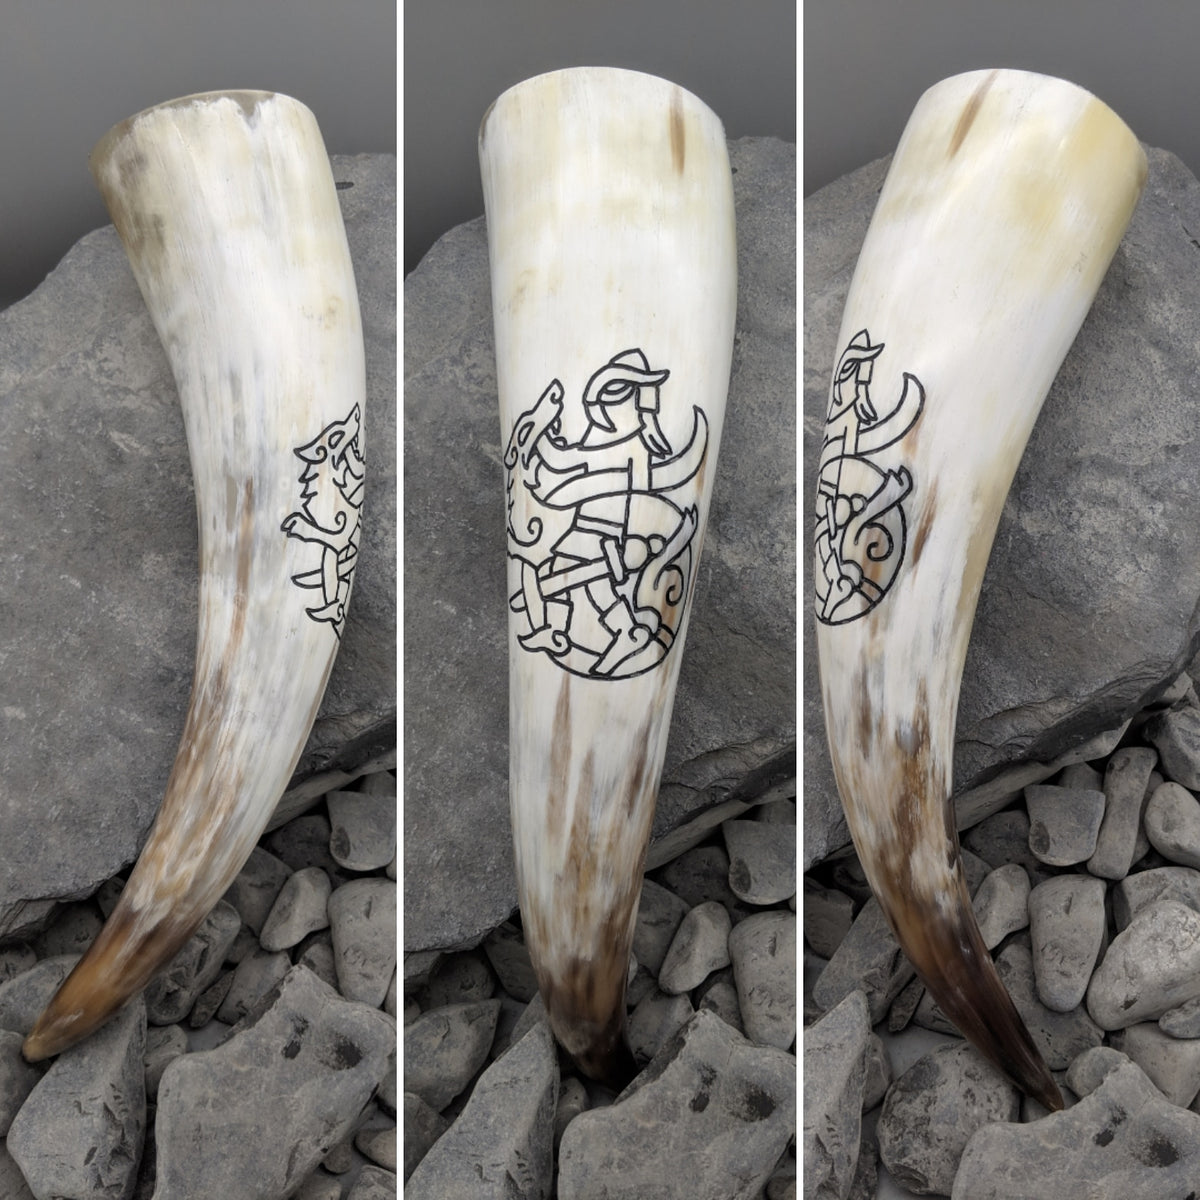 The Binding of Fenrir drinking horn